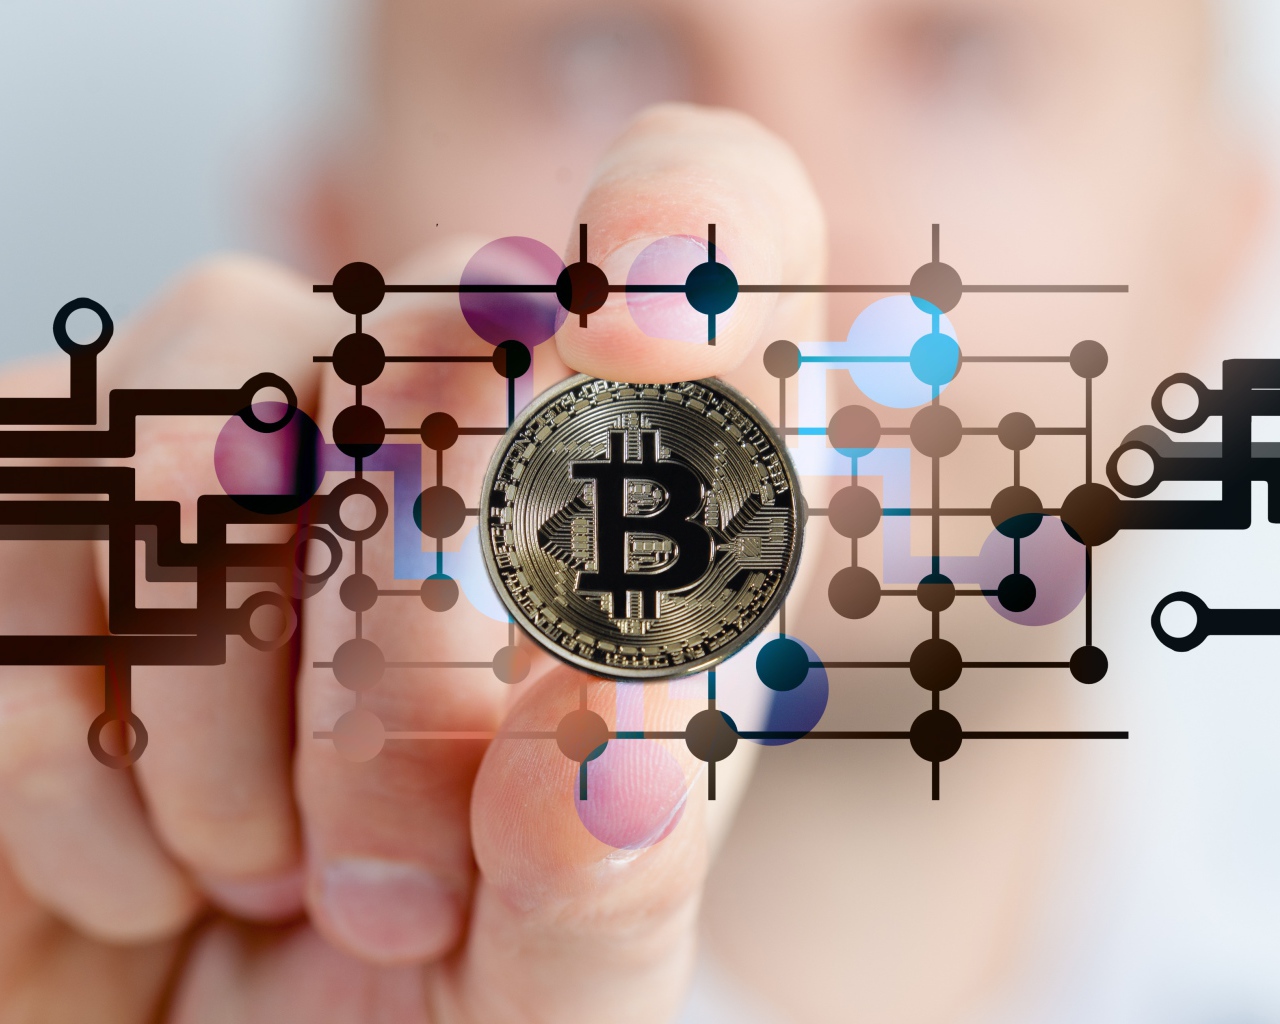 Bitcoin coin in the scheme